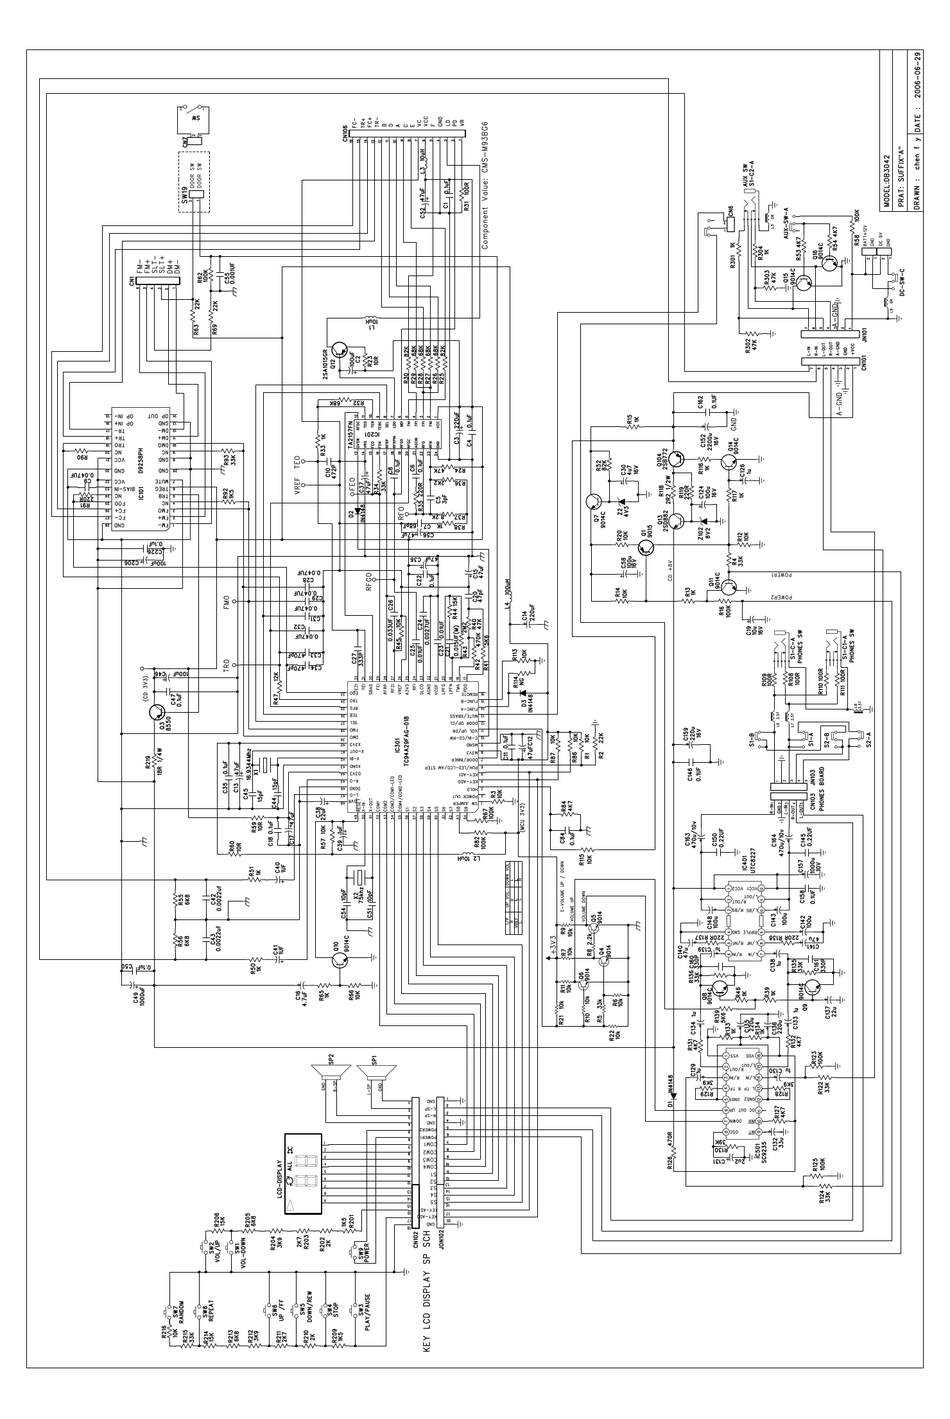 Memorex Db3042 Mersm Schematic Diagrams Pdf Download Manualslib